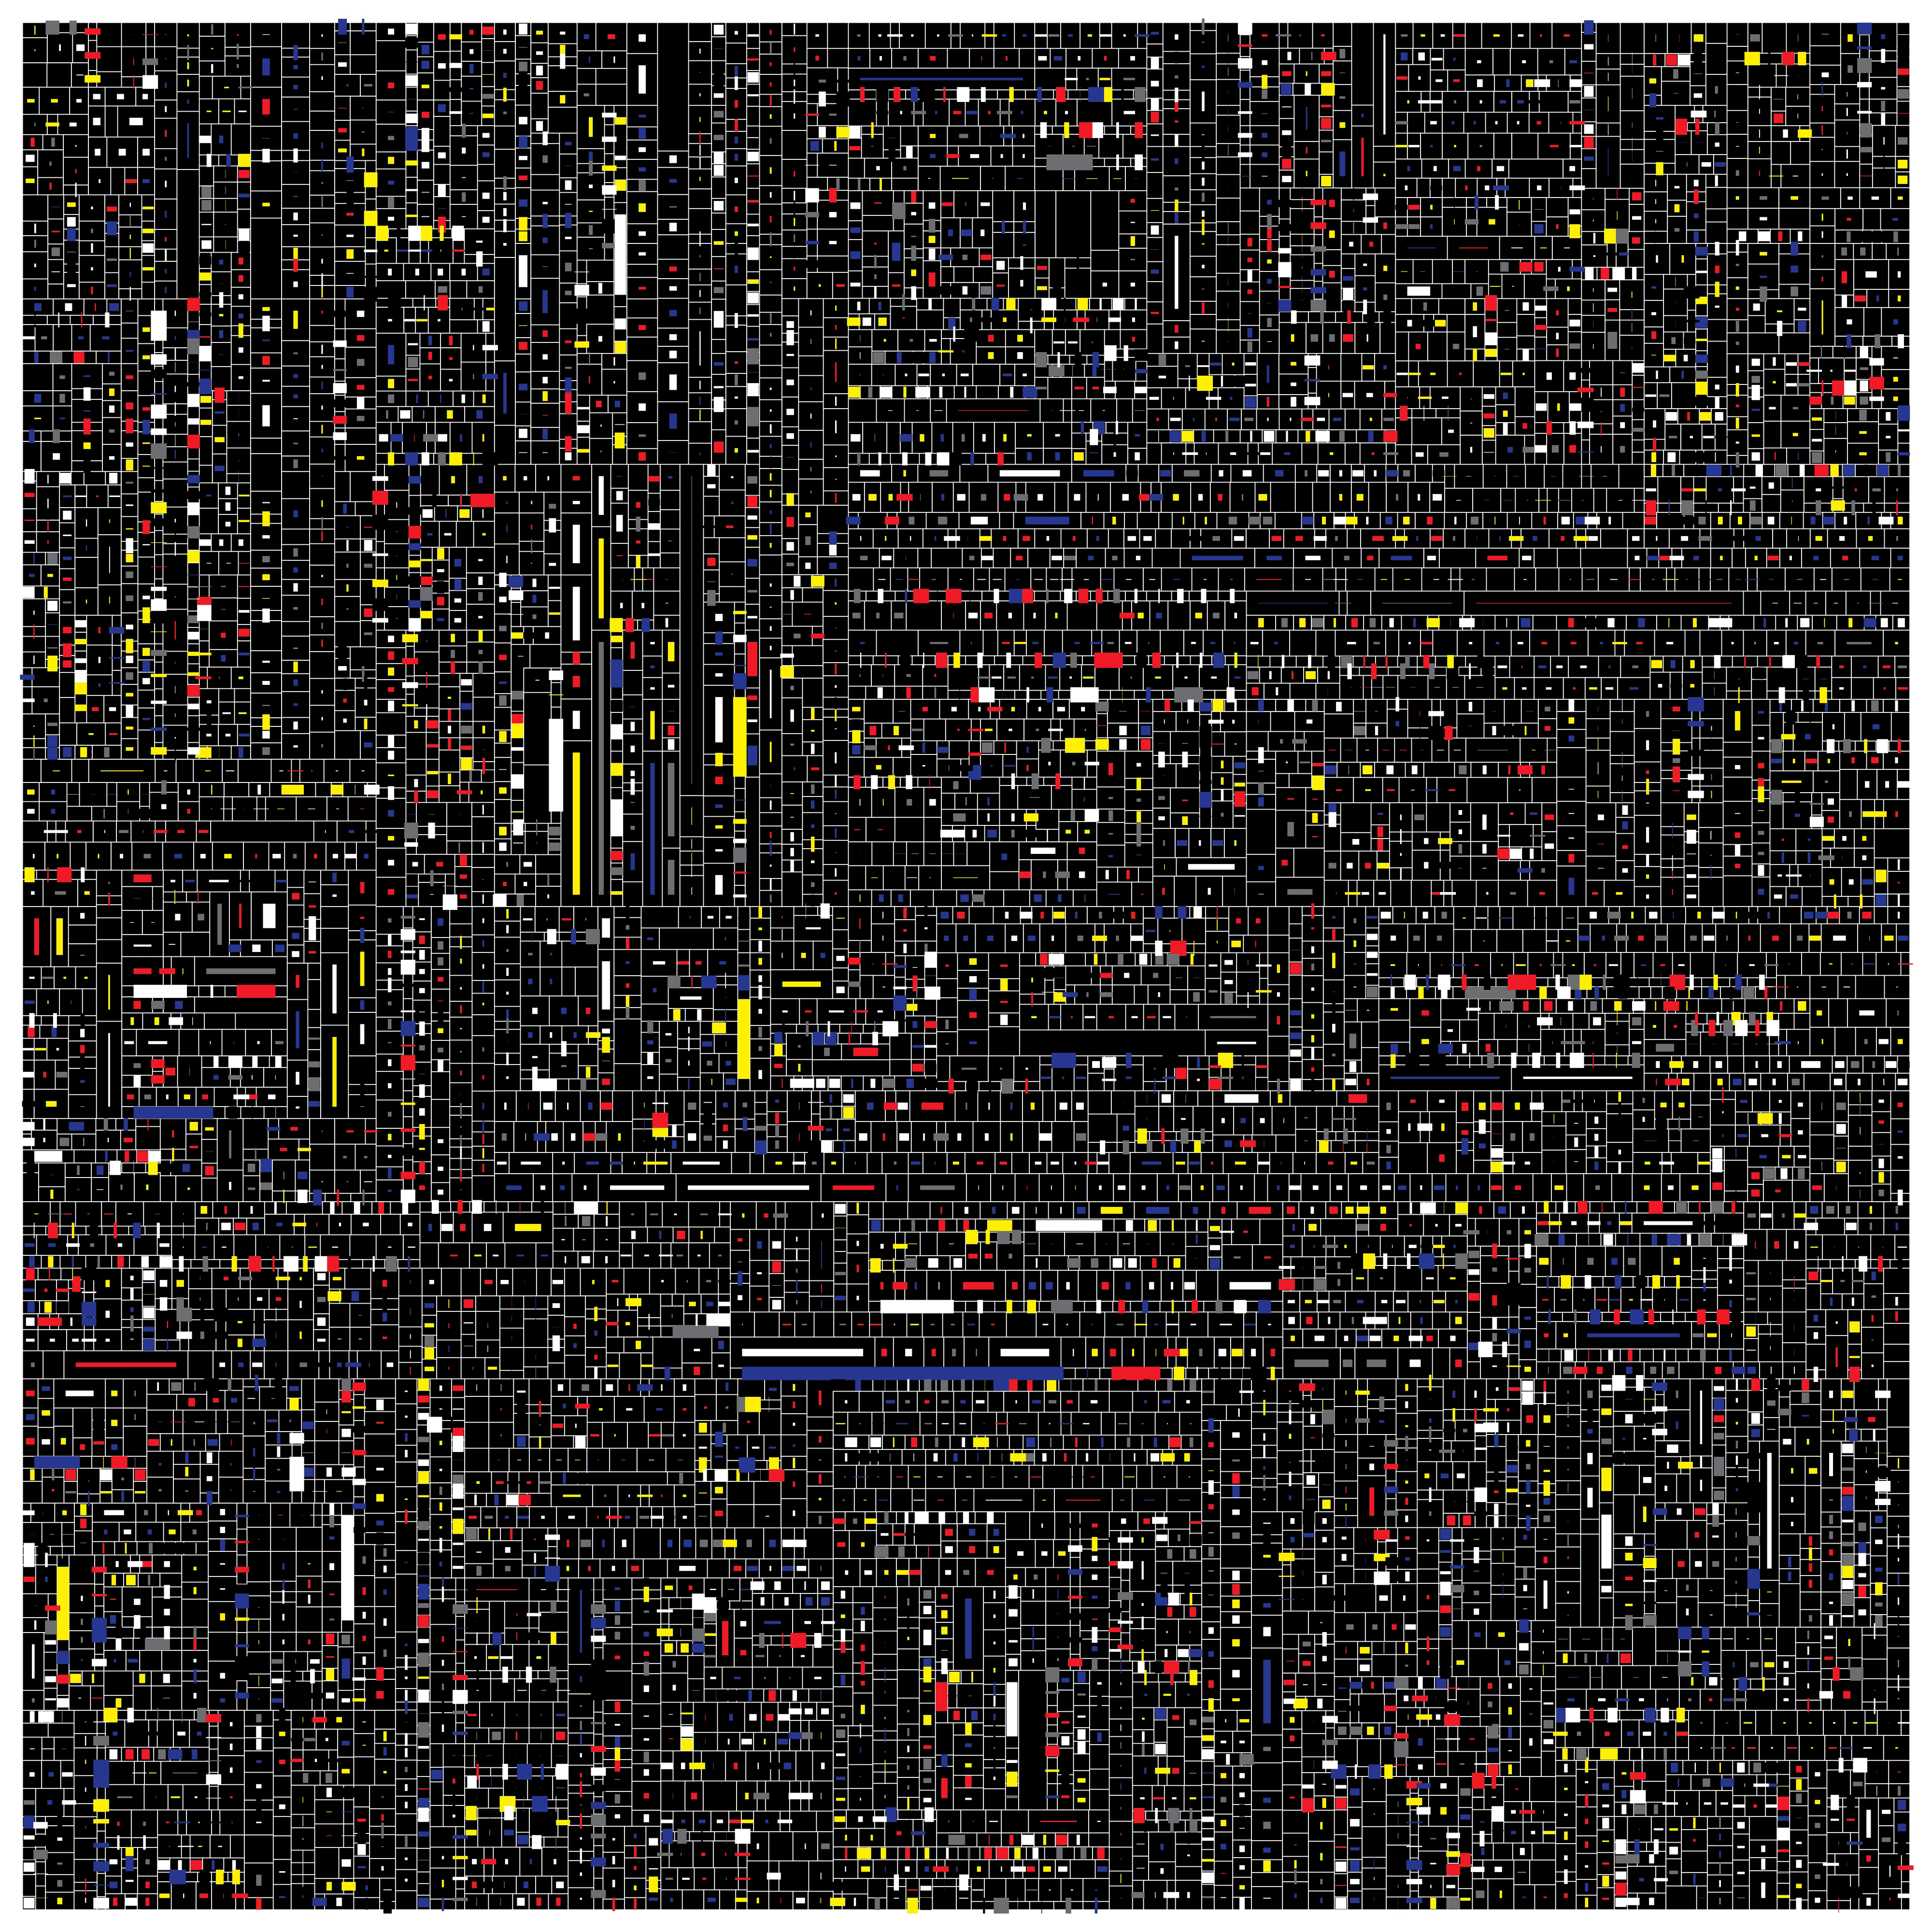 'Total Mondrian Dark' (8342) Cryptocurrencies - MooniTooki Project - NFT Art from Crypto Data - Polygon Blockchain